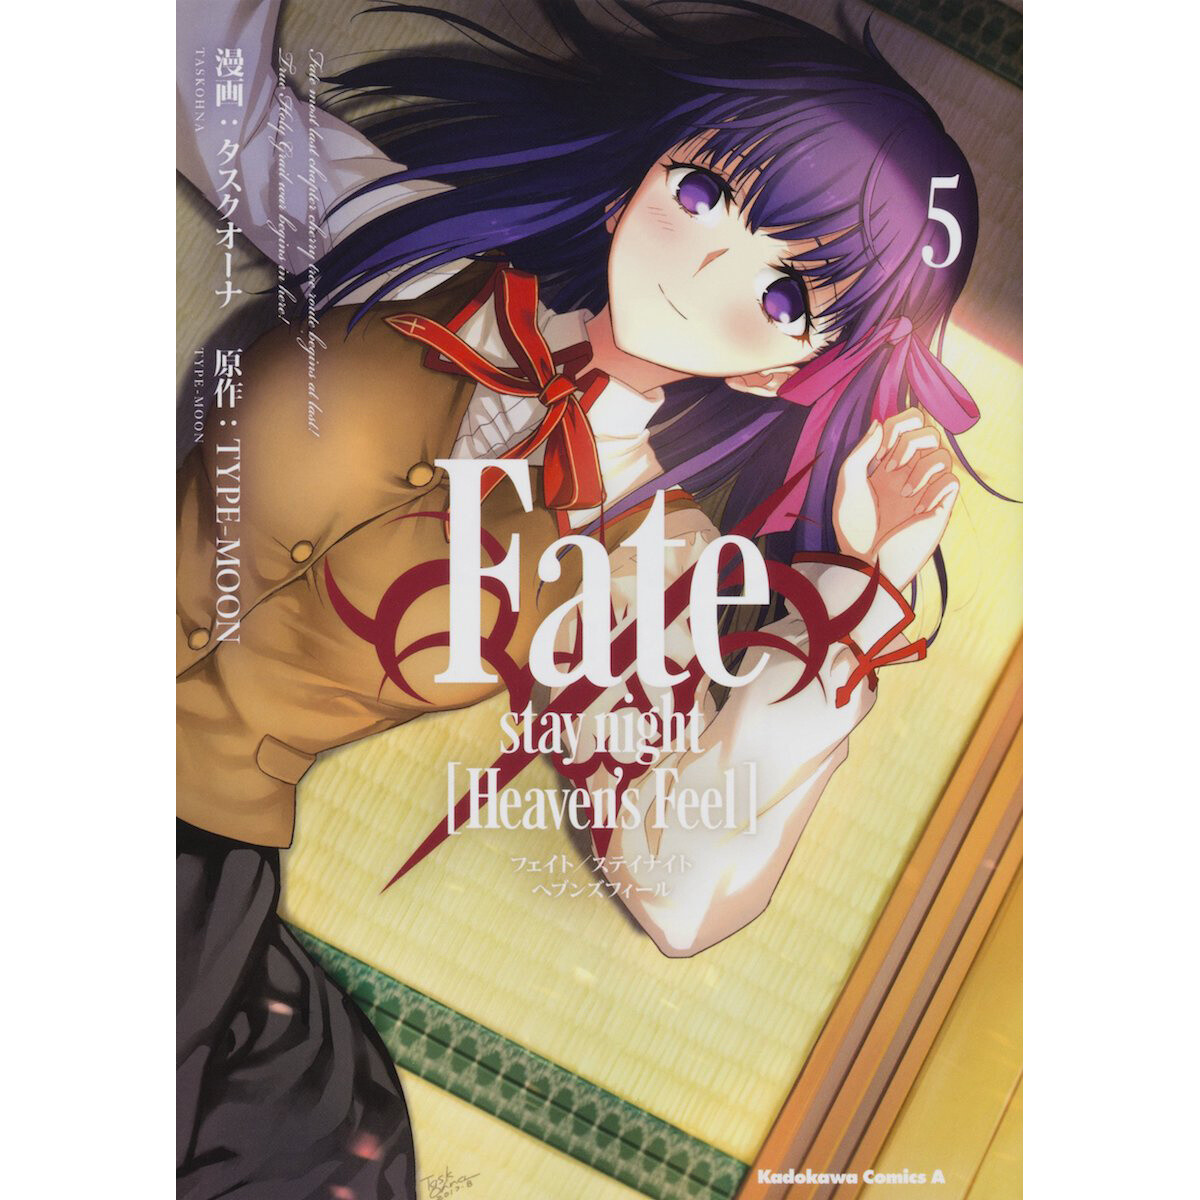 FATE STAY NIGHT Heaven's Feel Vol. 9 Japanese Language Anime Manga